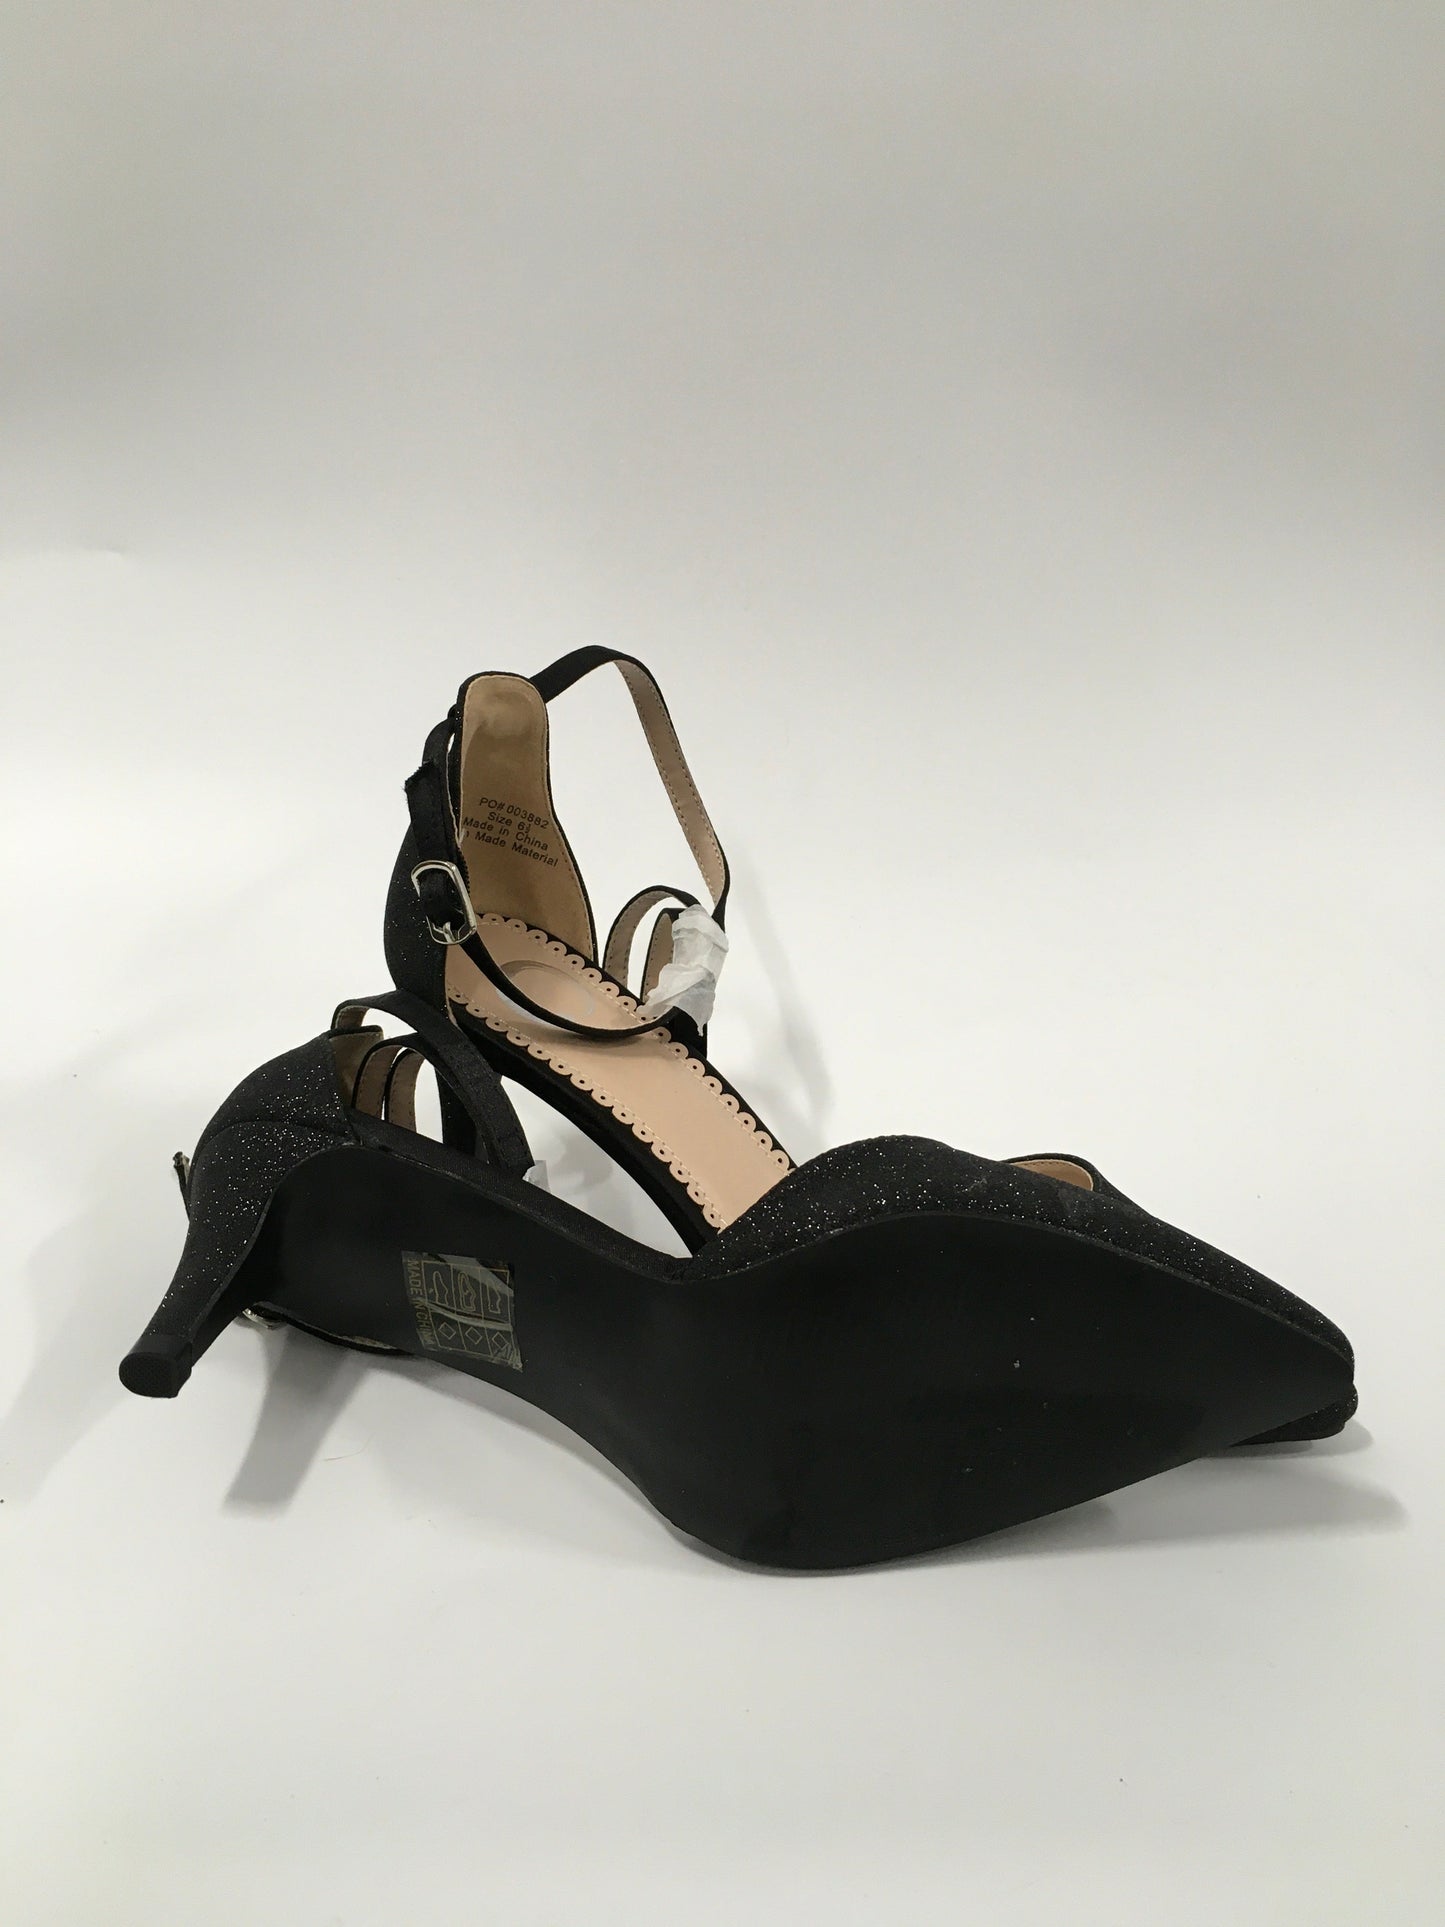 Black Shoes Heels Stiletto Clothes Mentor, Size 6.5